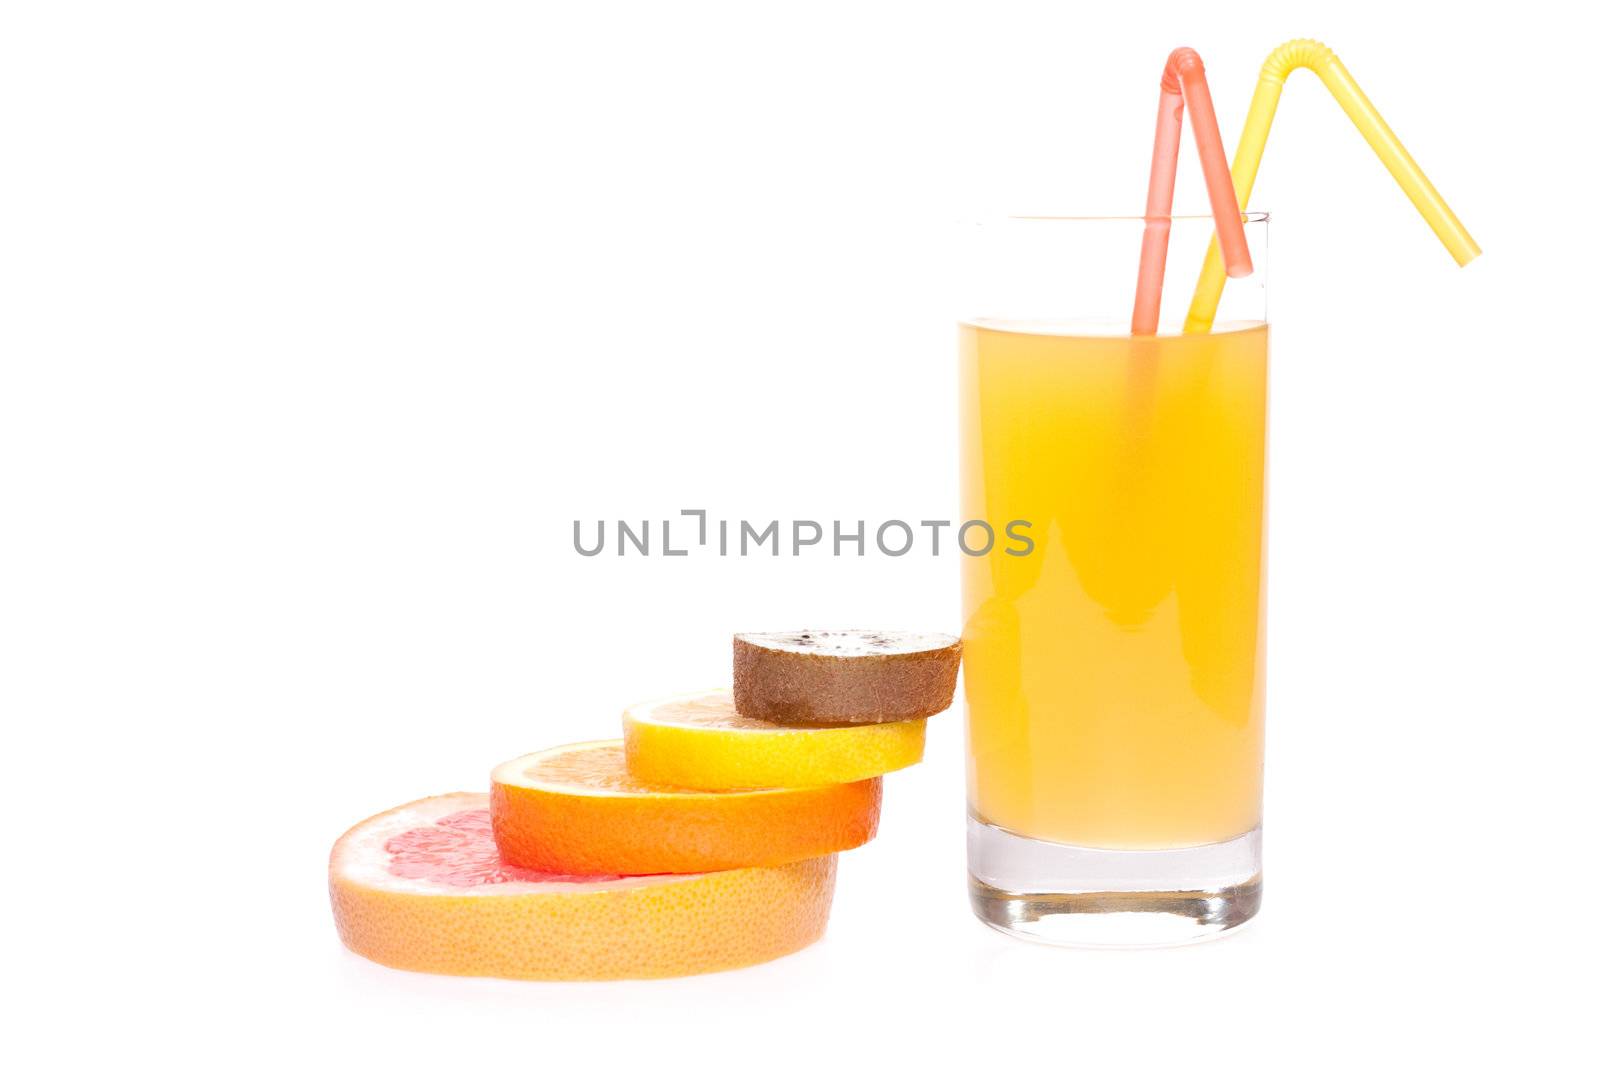 juice in glass with orange, grapefruit, kiwi and lemon on a white background